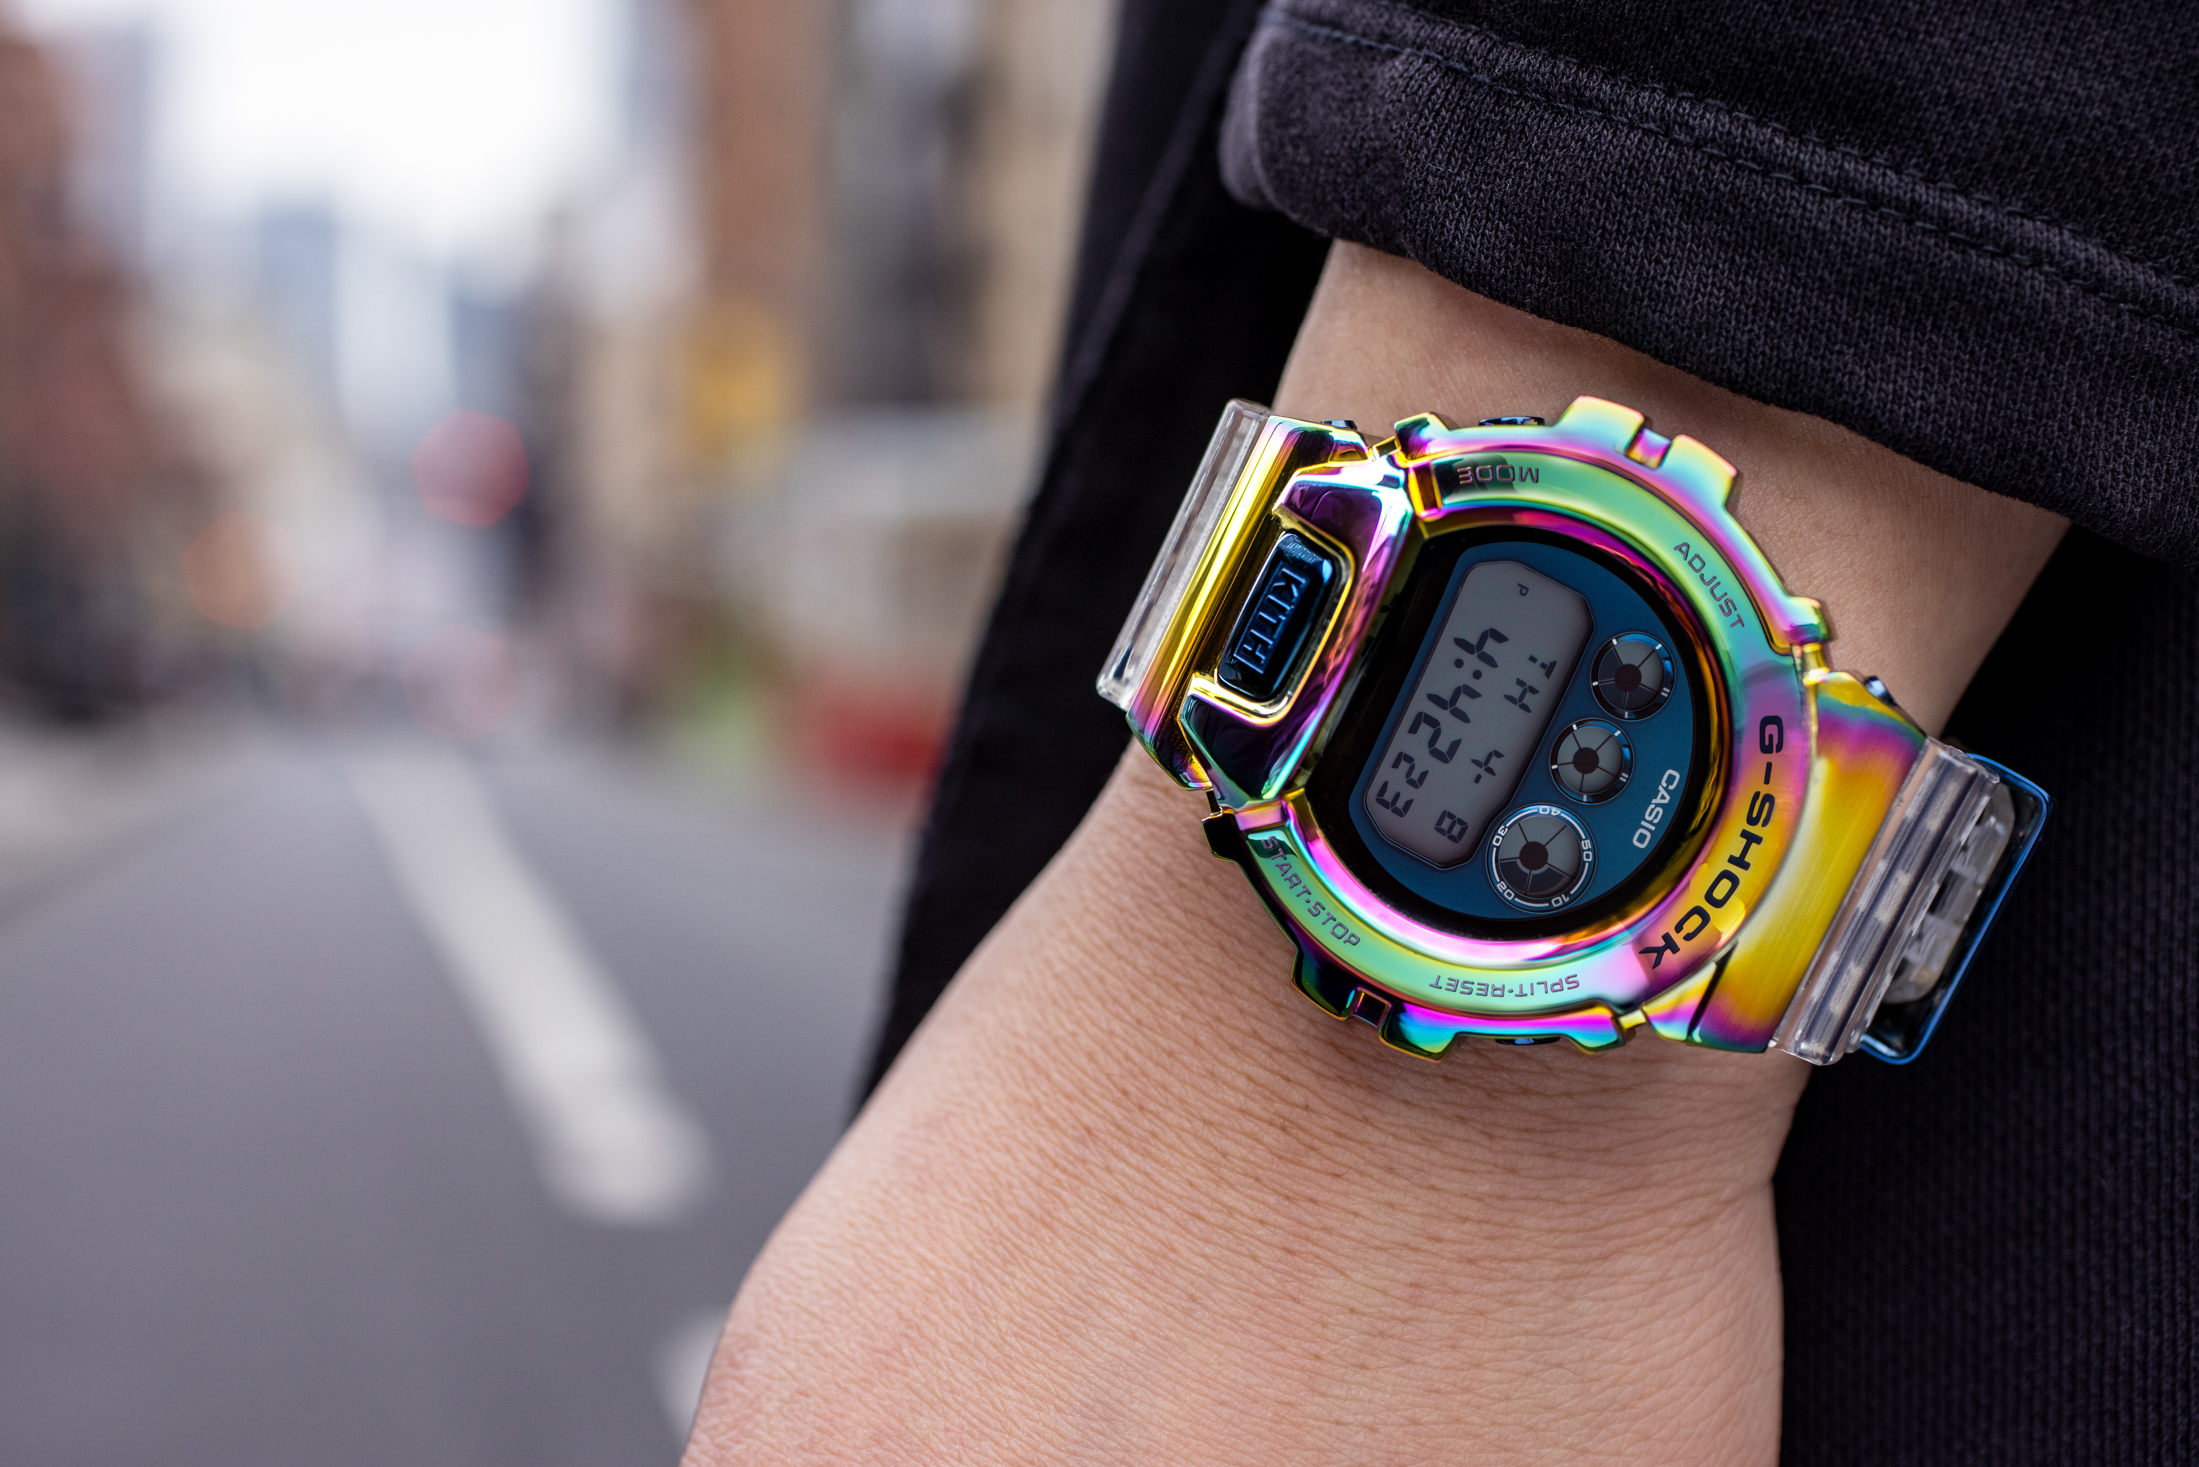 Kith G-SHOCK GM-6900レインボー 10周年限定モデル時計 - 腕時計(デジタル)